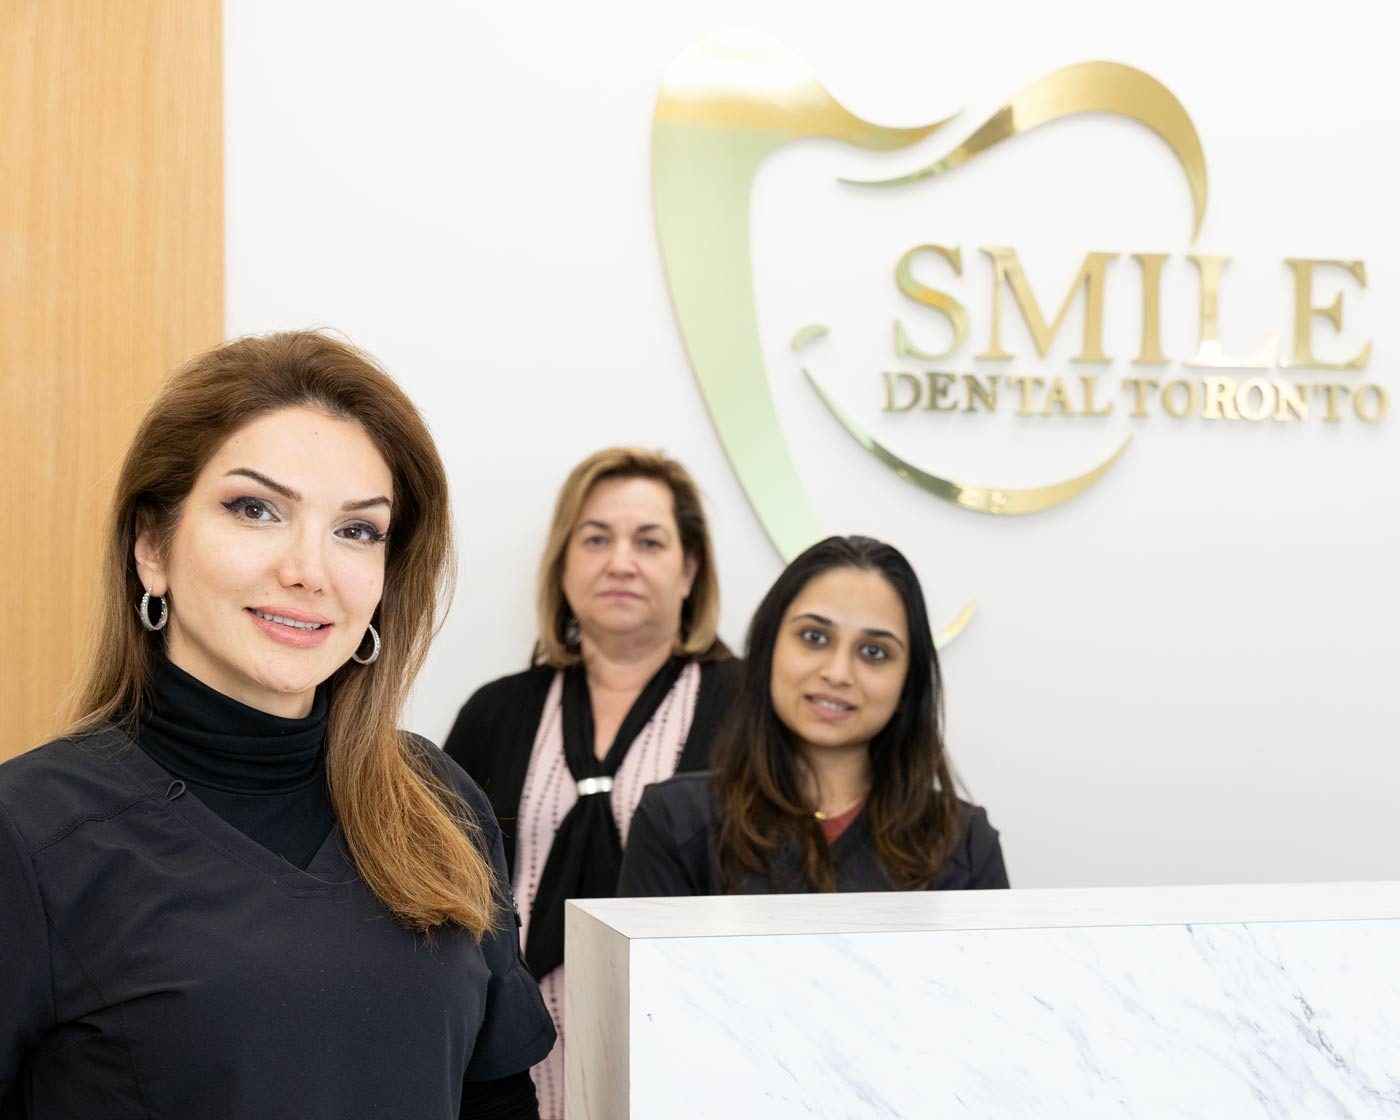 Smile Dental Toronto Offers Online Booking